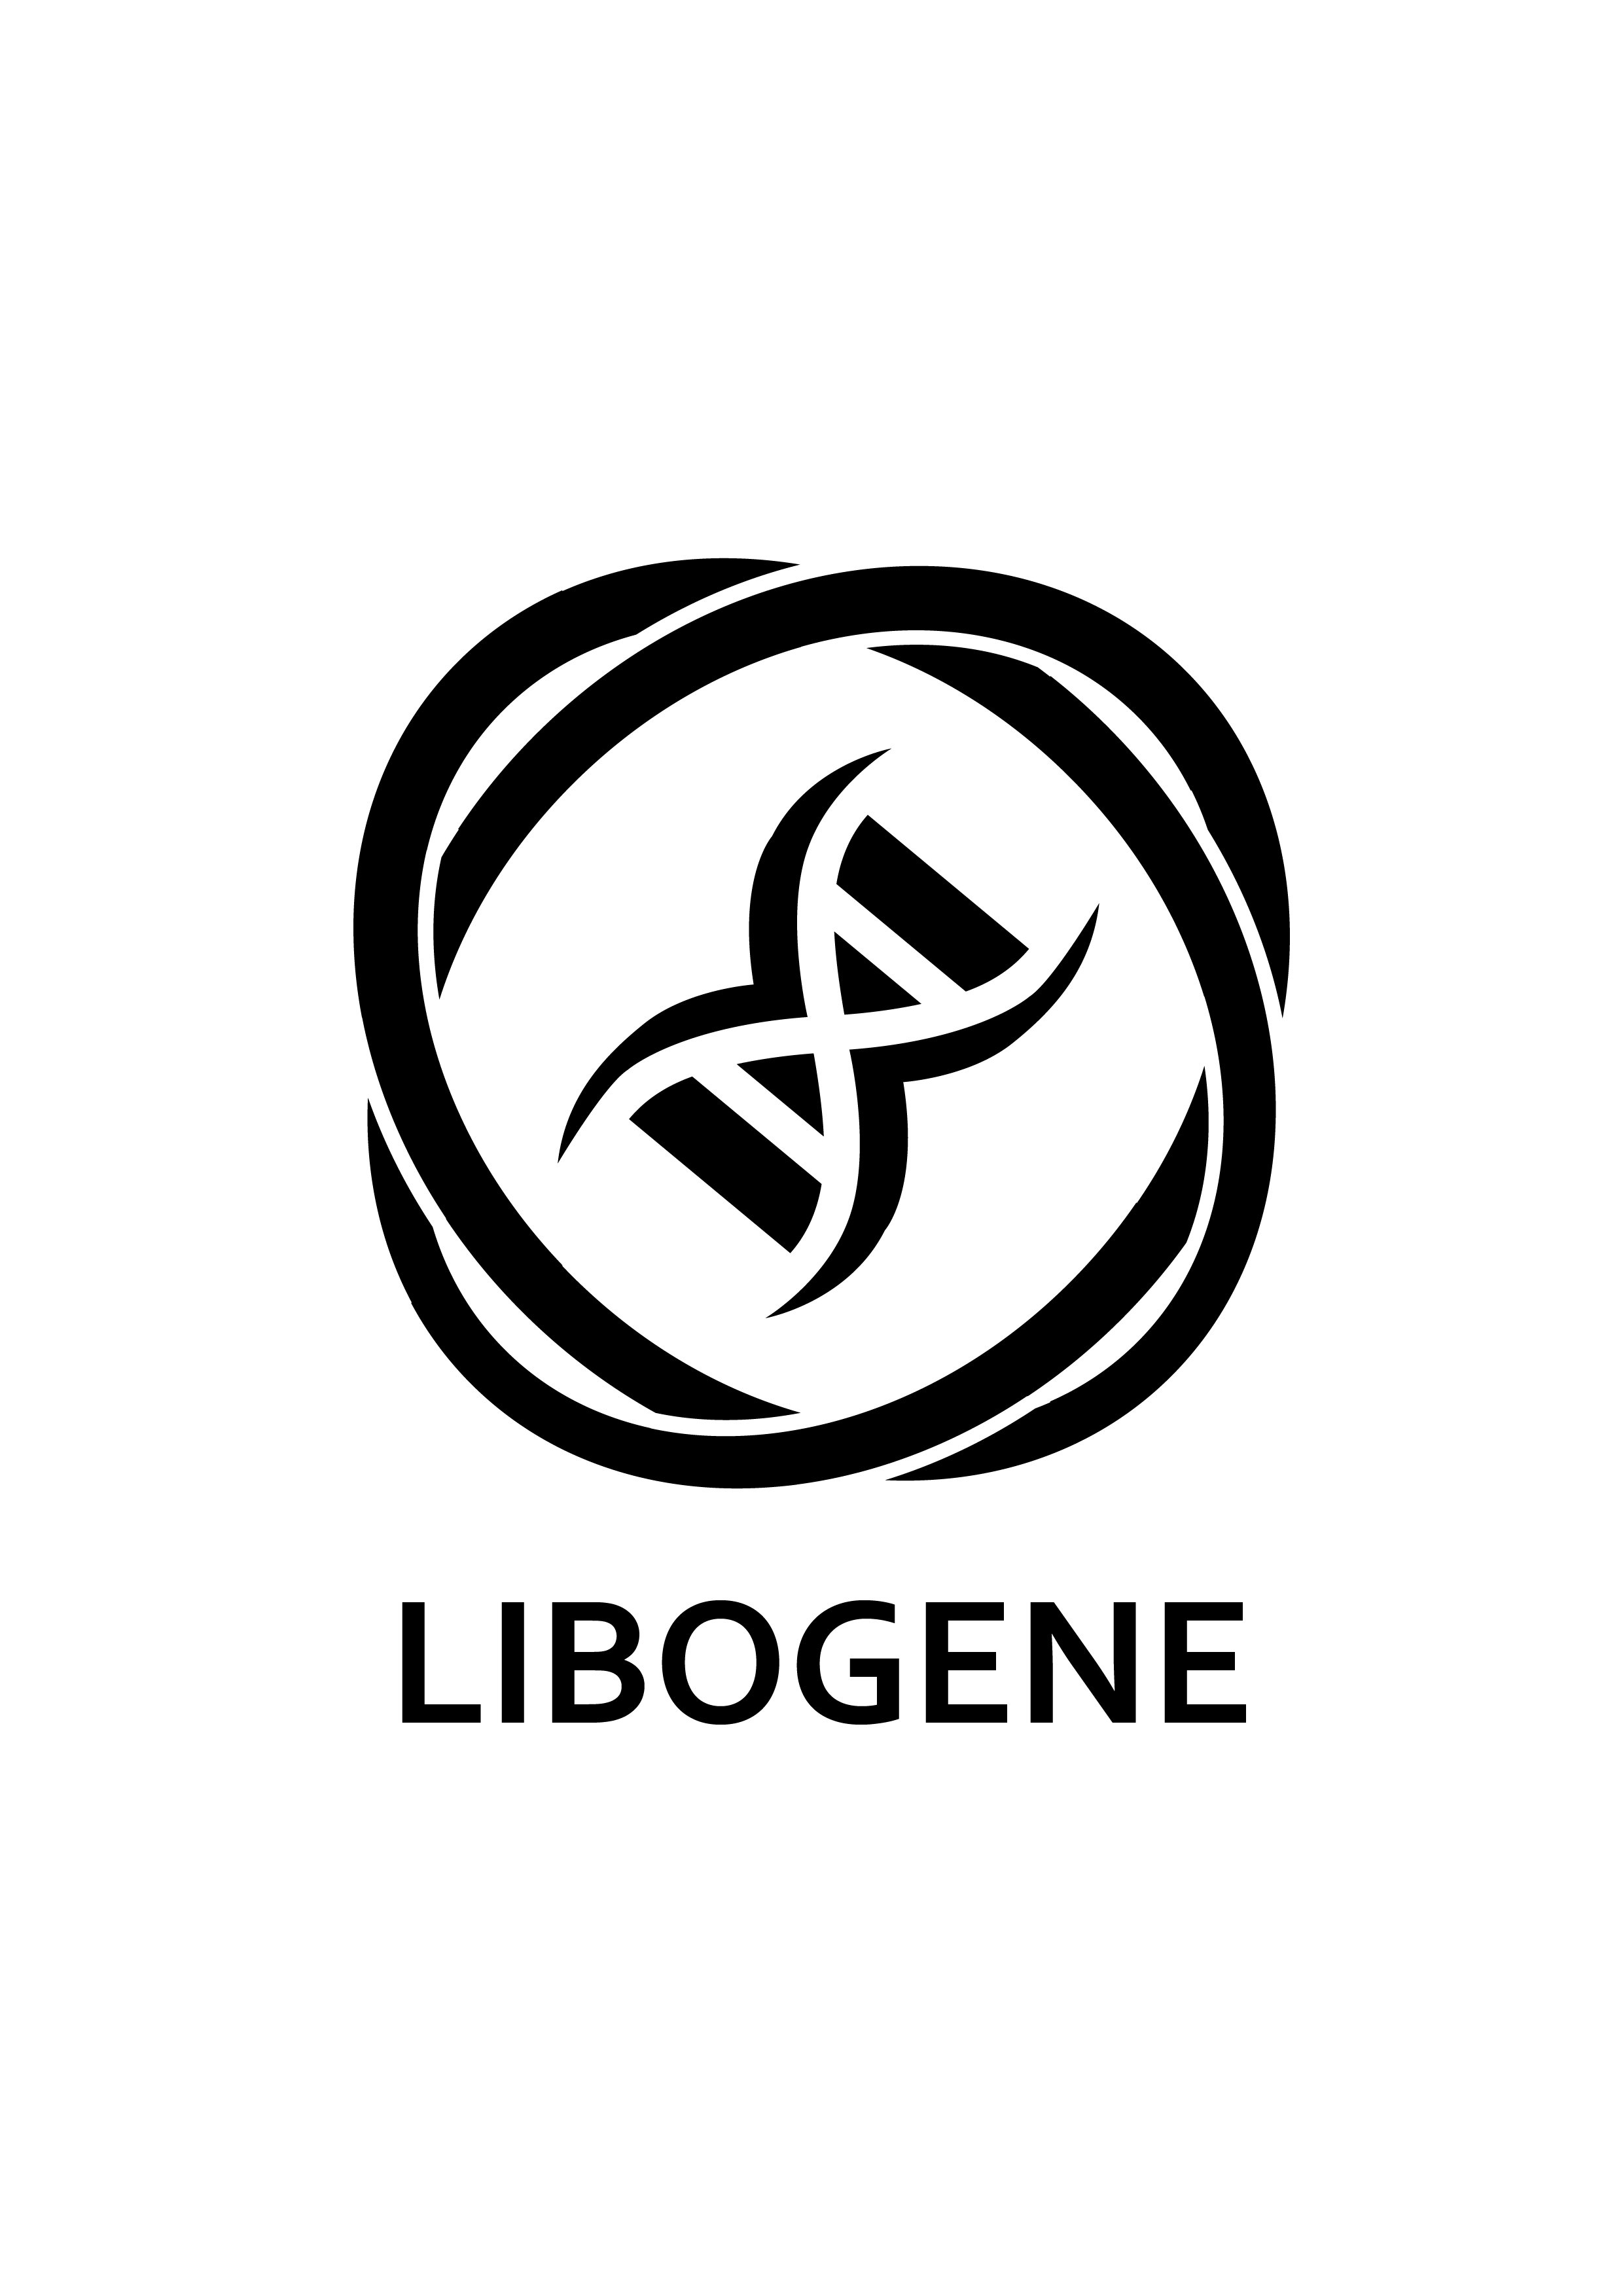  LIBOGENE